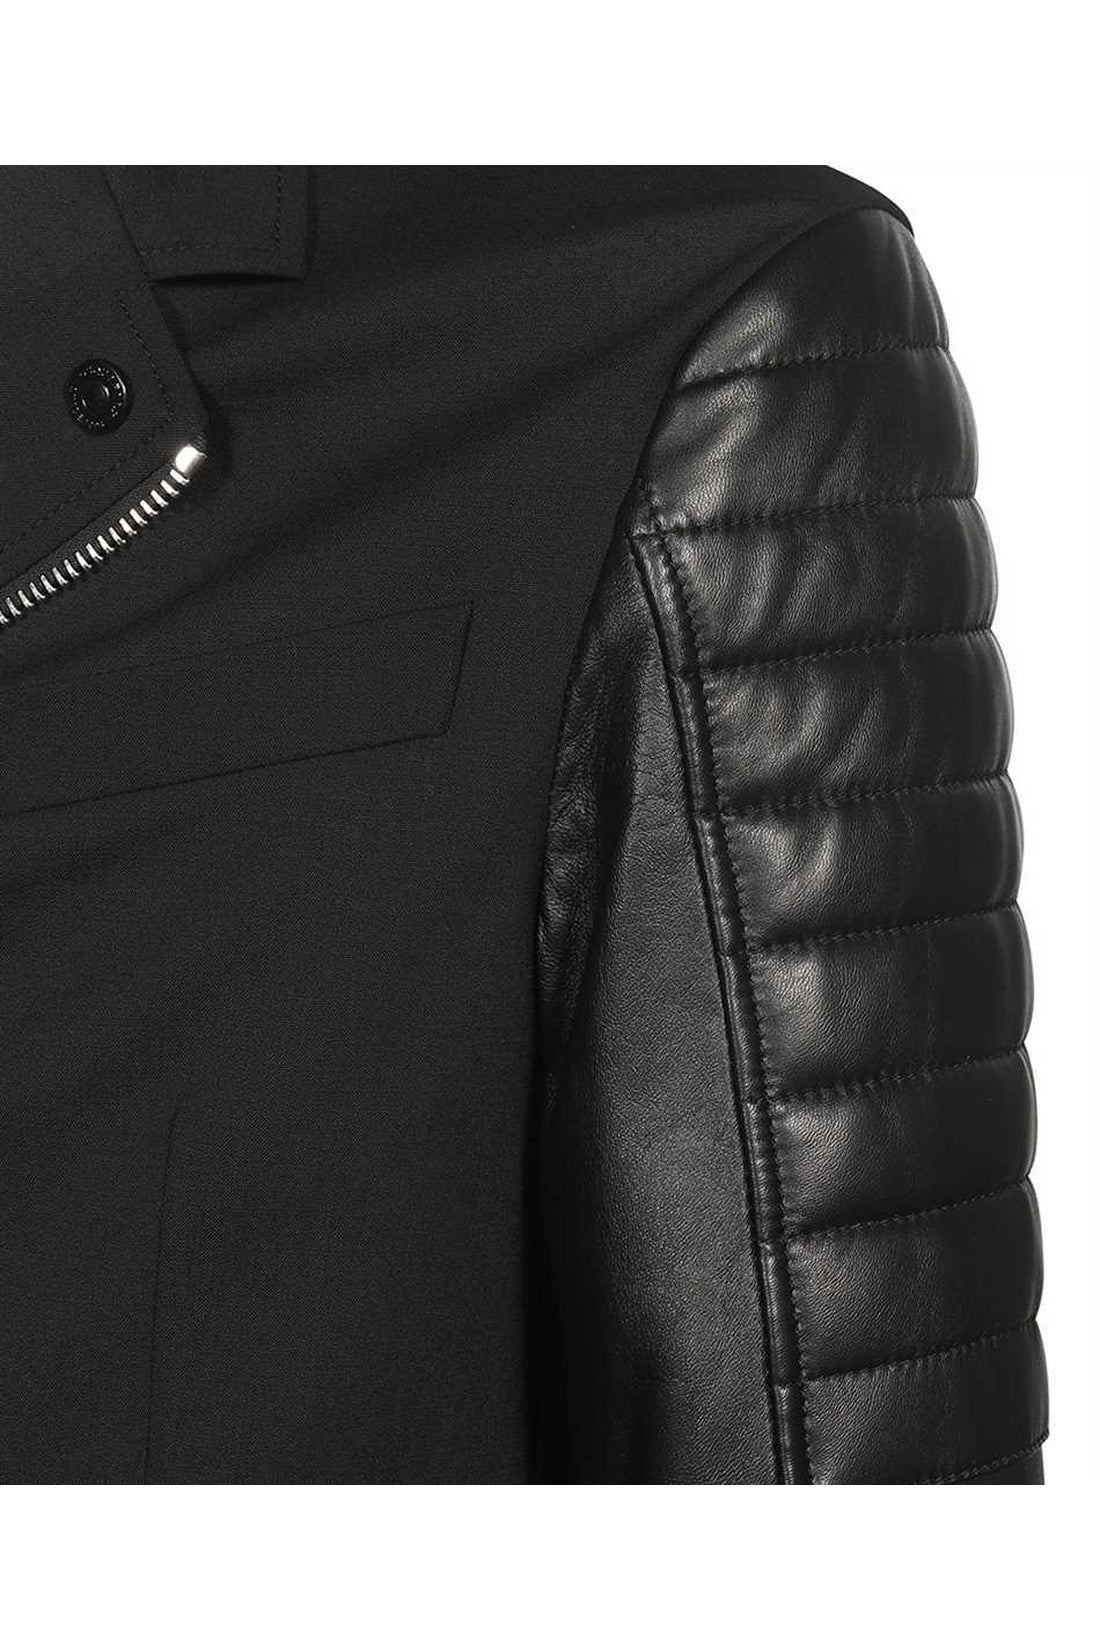 Dsquared2-OUTLET-SALE-Full zip jacket-ARCHIVIST